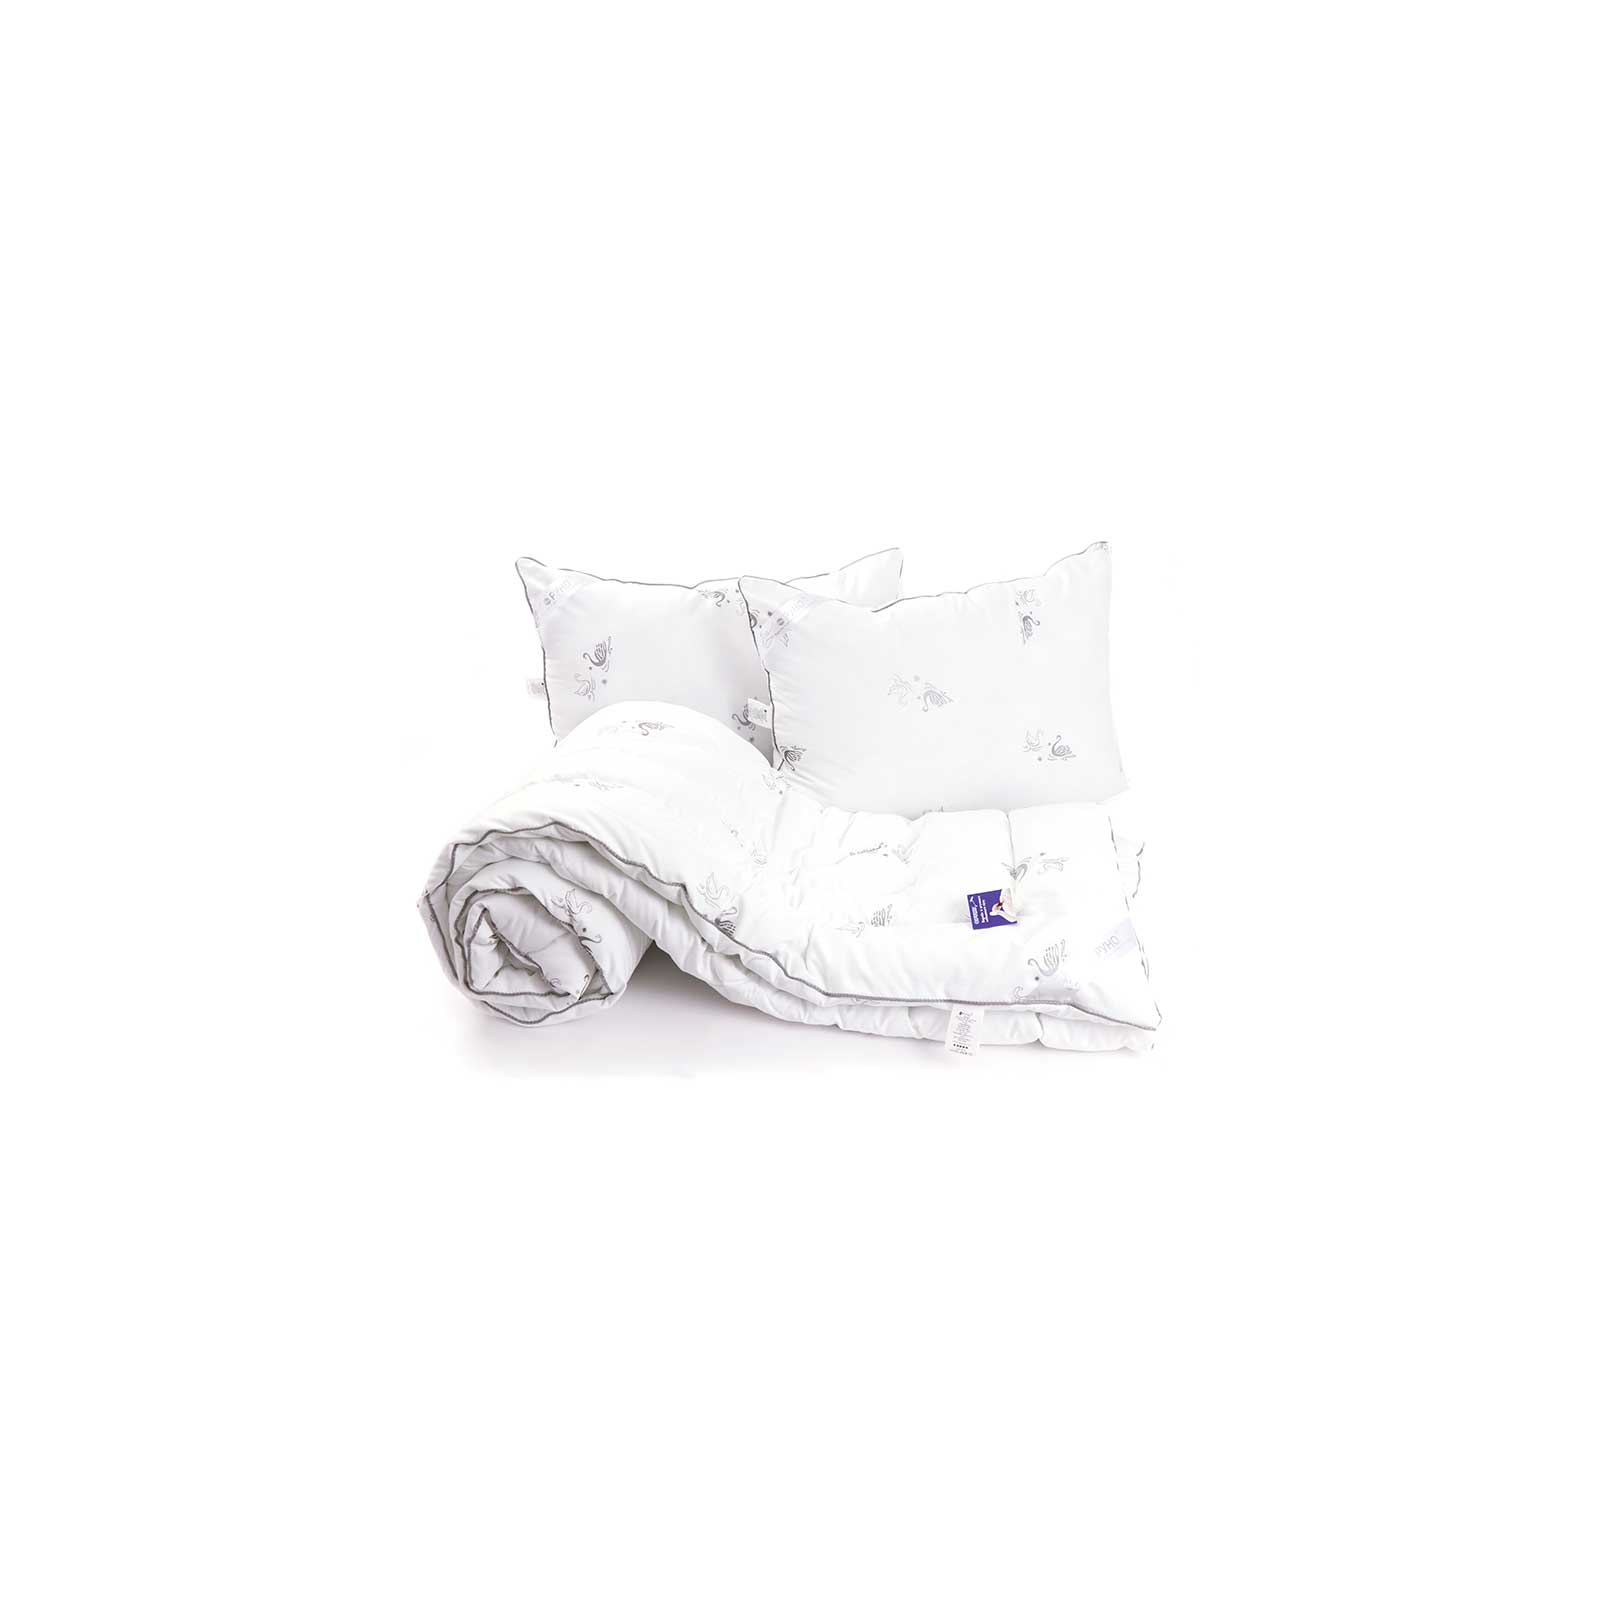 Одеяло Руно набор Одеяло зима из искусственного лебединого пуха Silver Swan 200х220 см с двумя подушками 50х (925.52_Silver Swan)